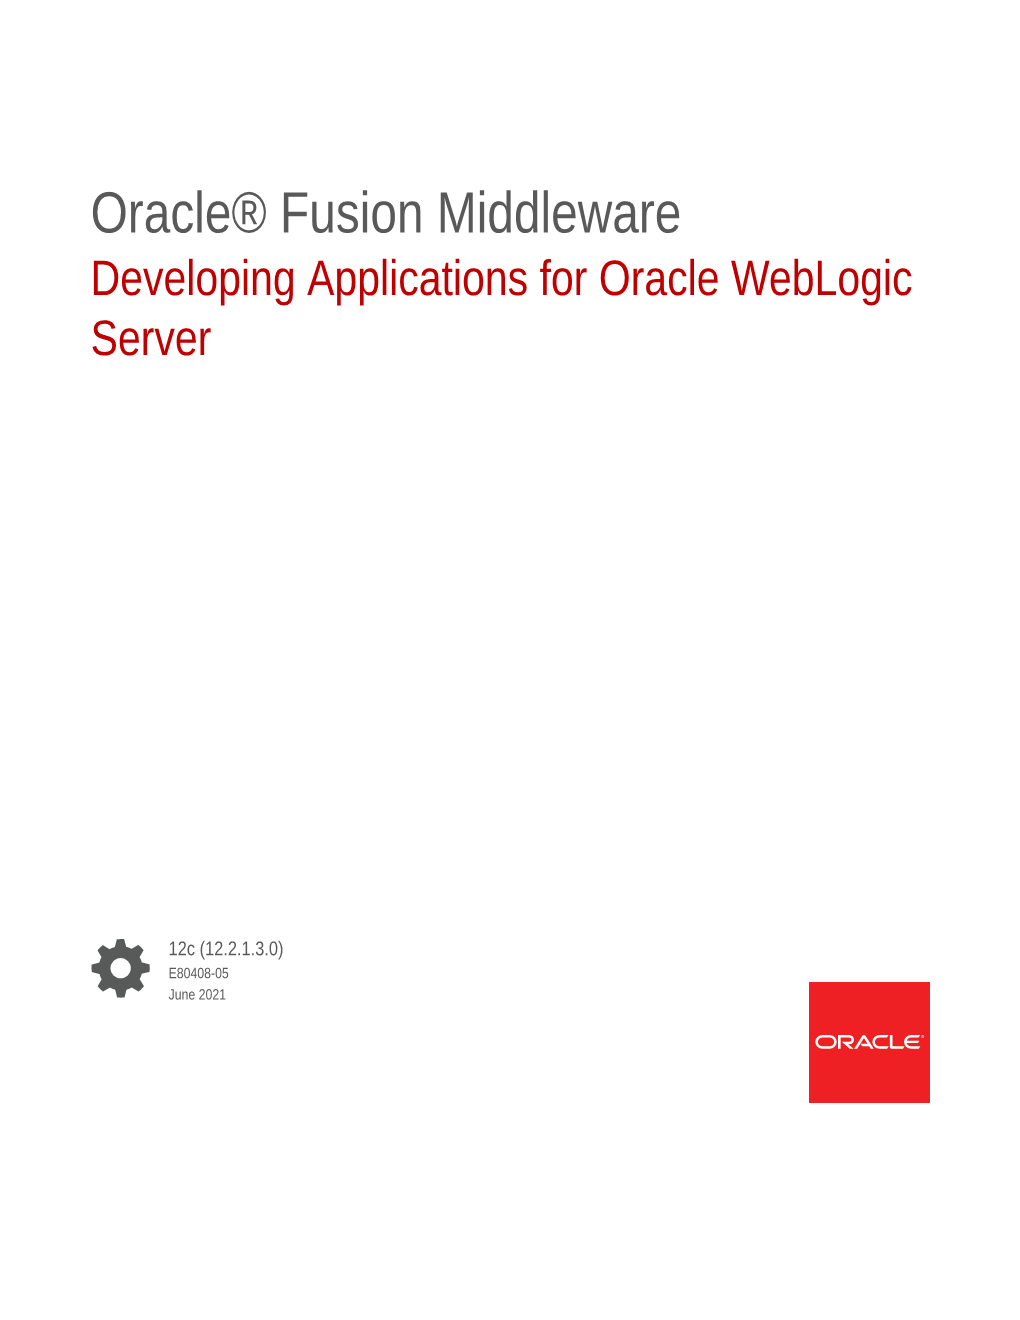 Developing Applications for Oracle Weblogic Server